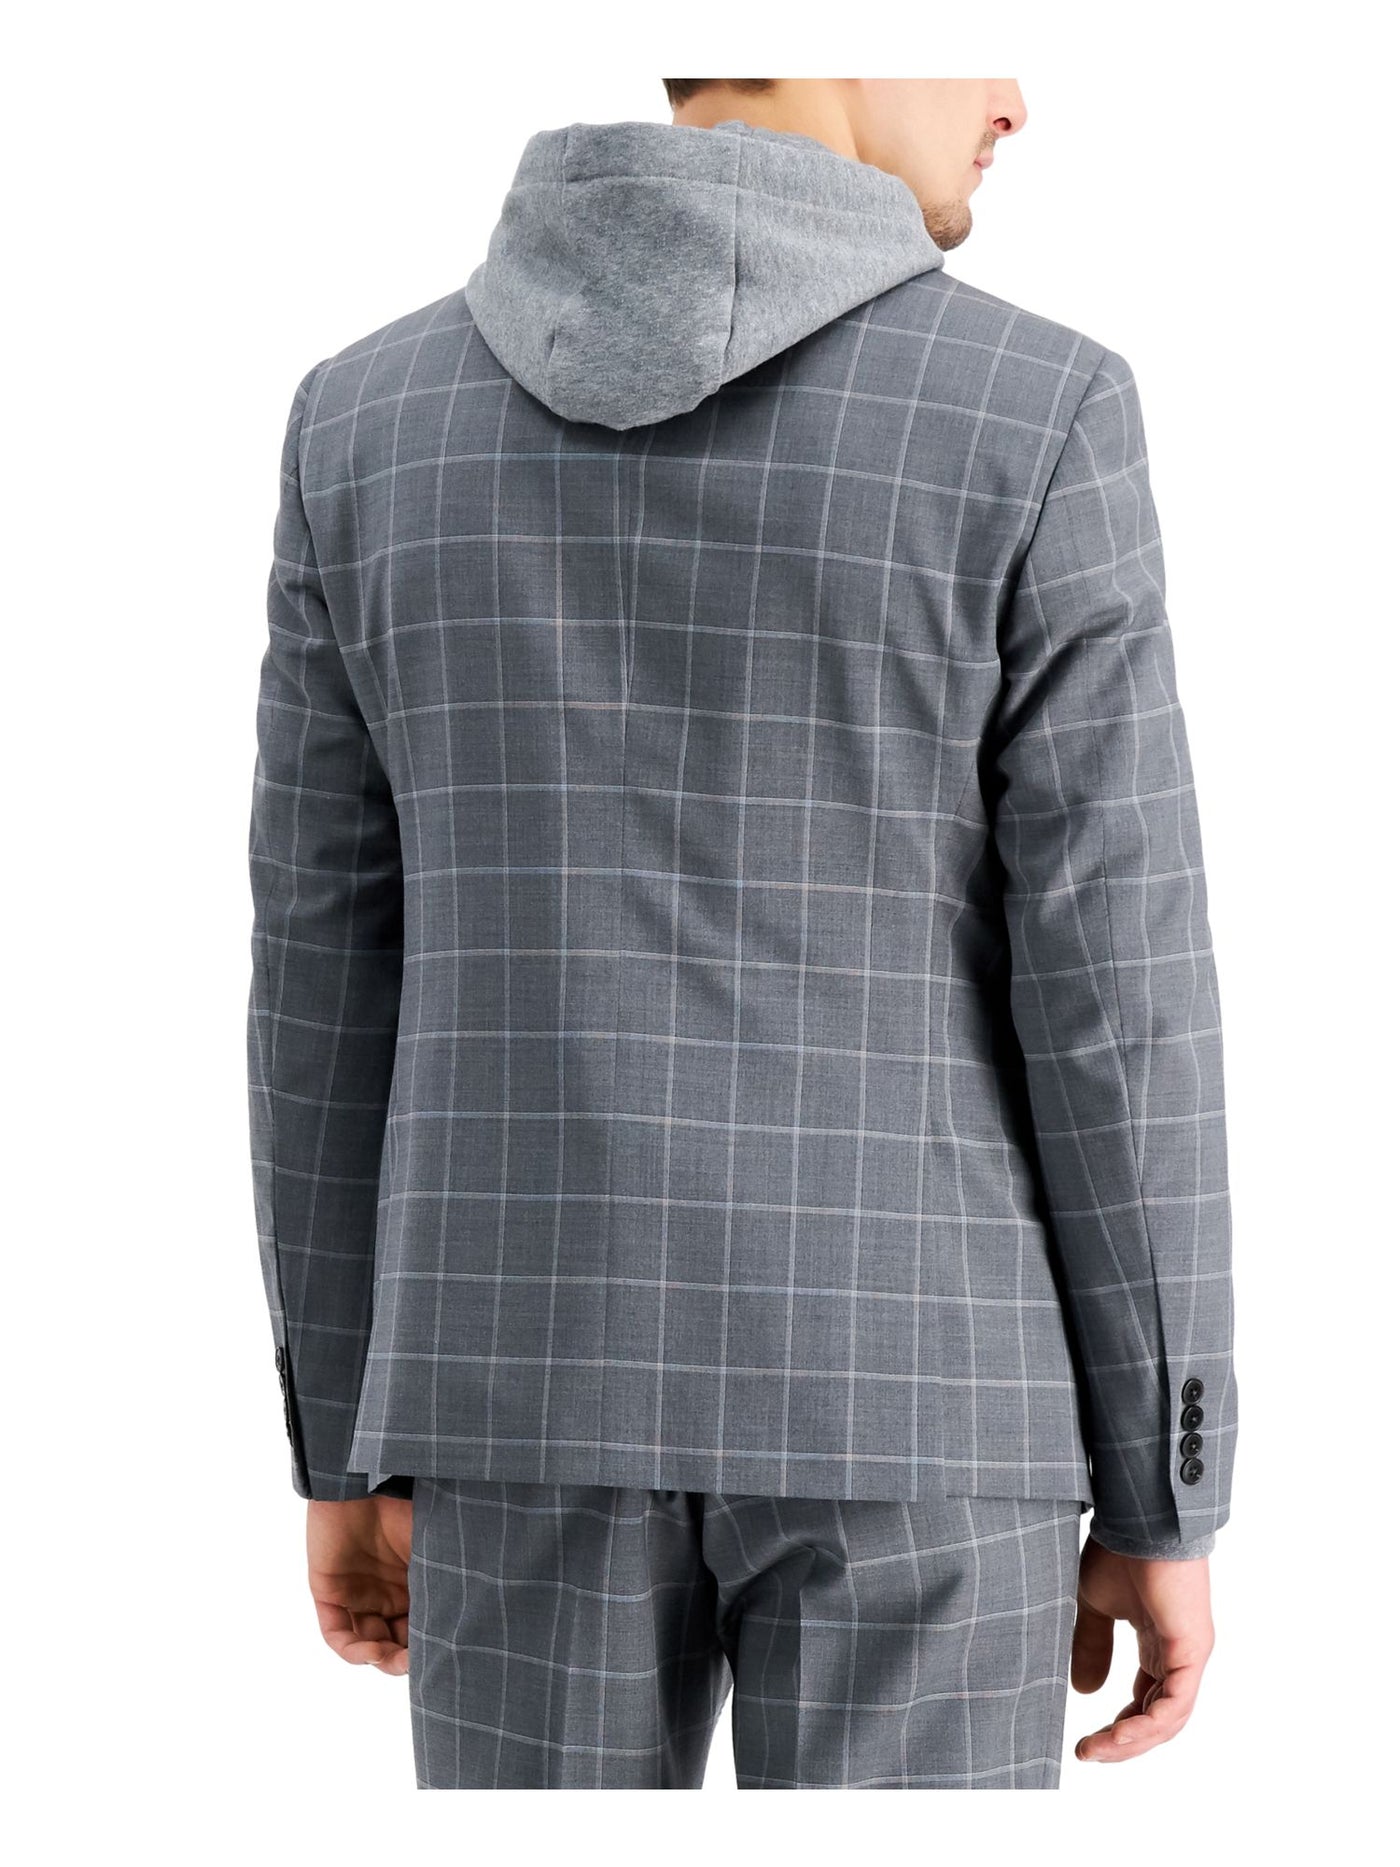 ARMANI Mens Gray Single Breasted, Windowpane Plaid Stretch Blazer Jacket 44L